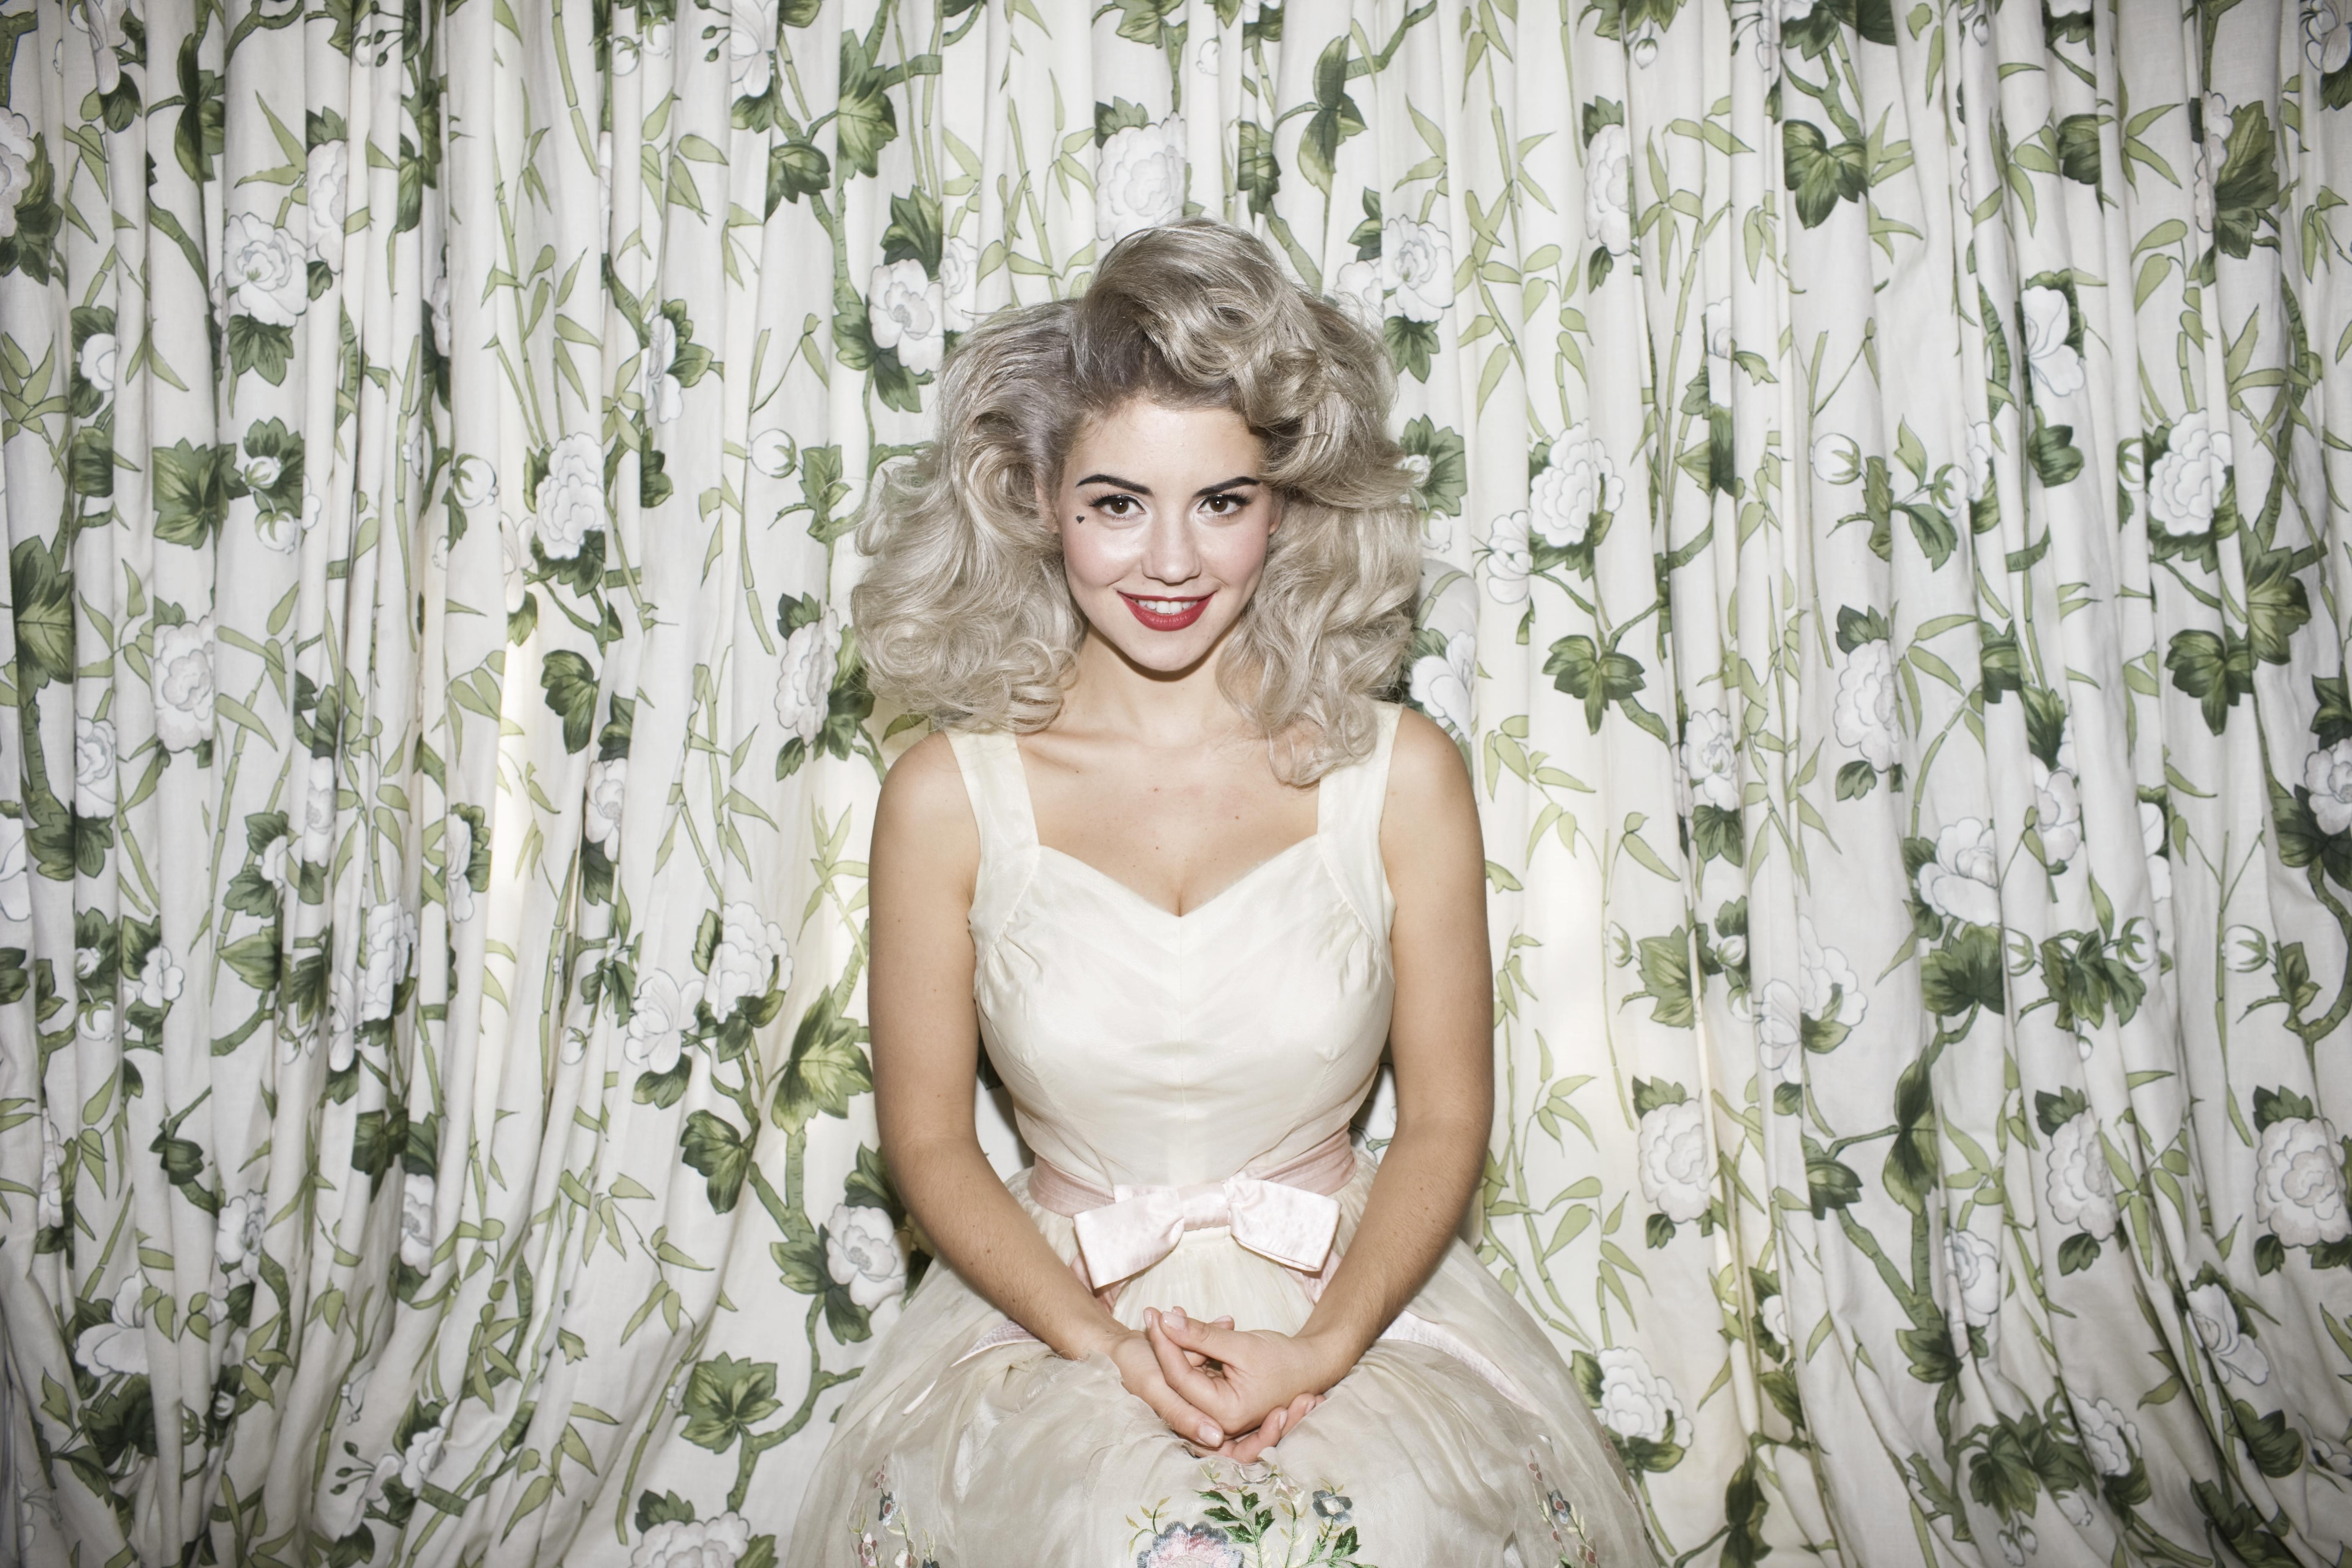 Marina And The Diamonds Electra Heart Photoshoot Wallpaperuse 8892